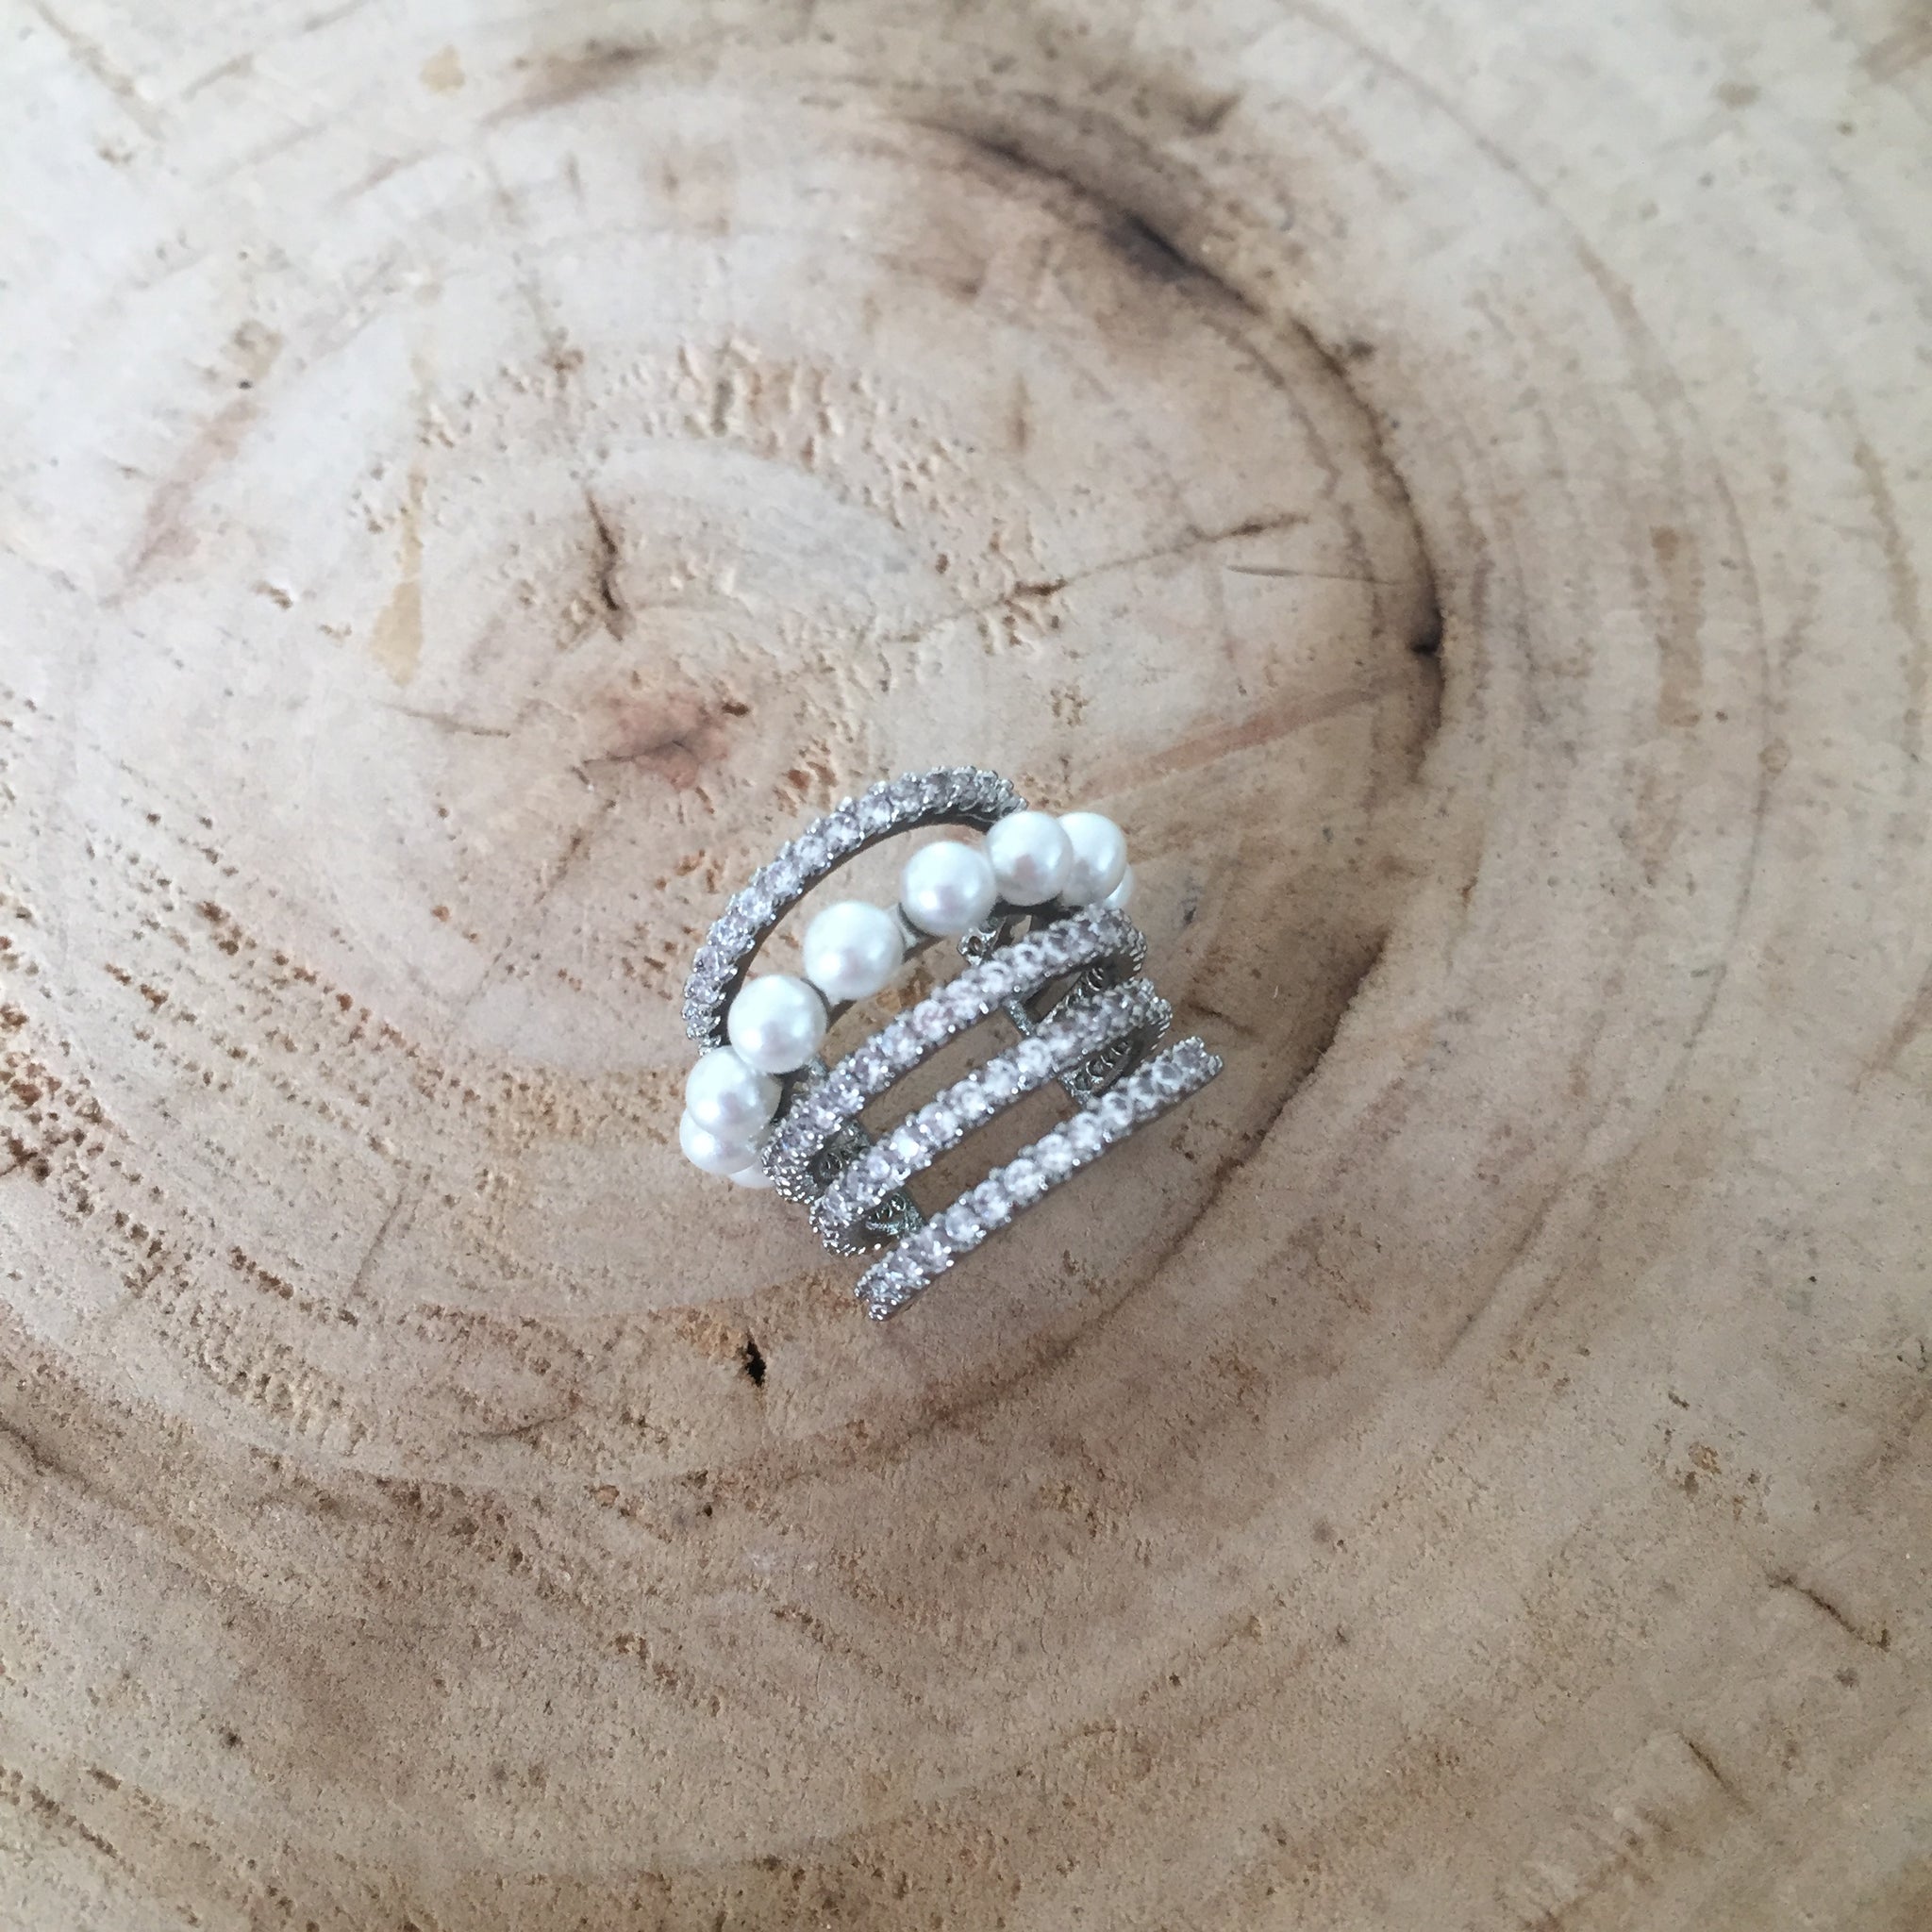 Pearl earrings - individually